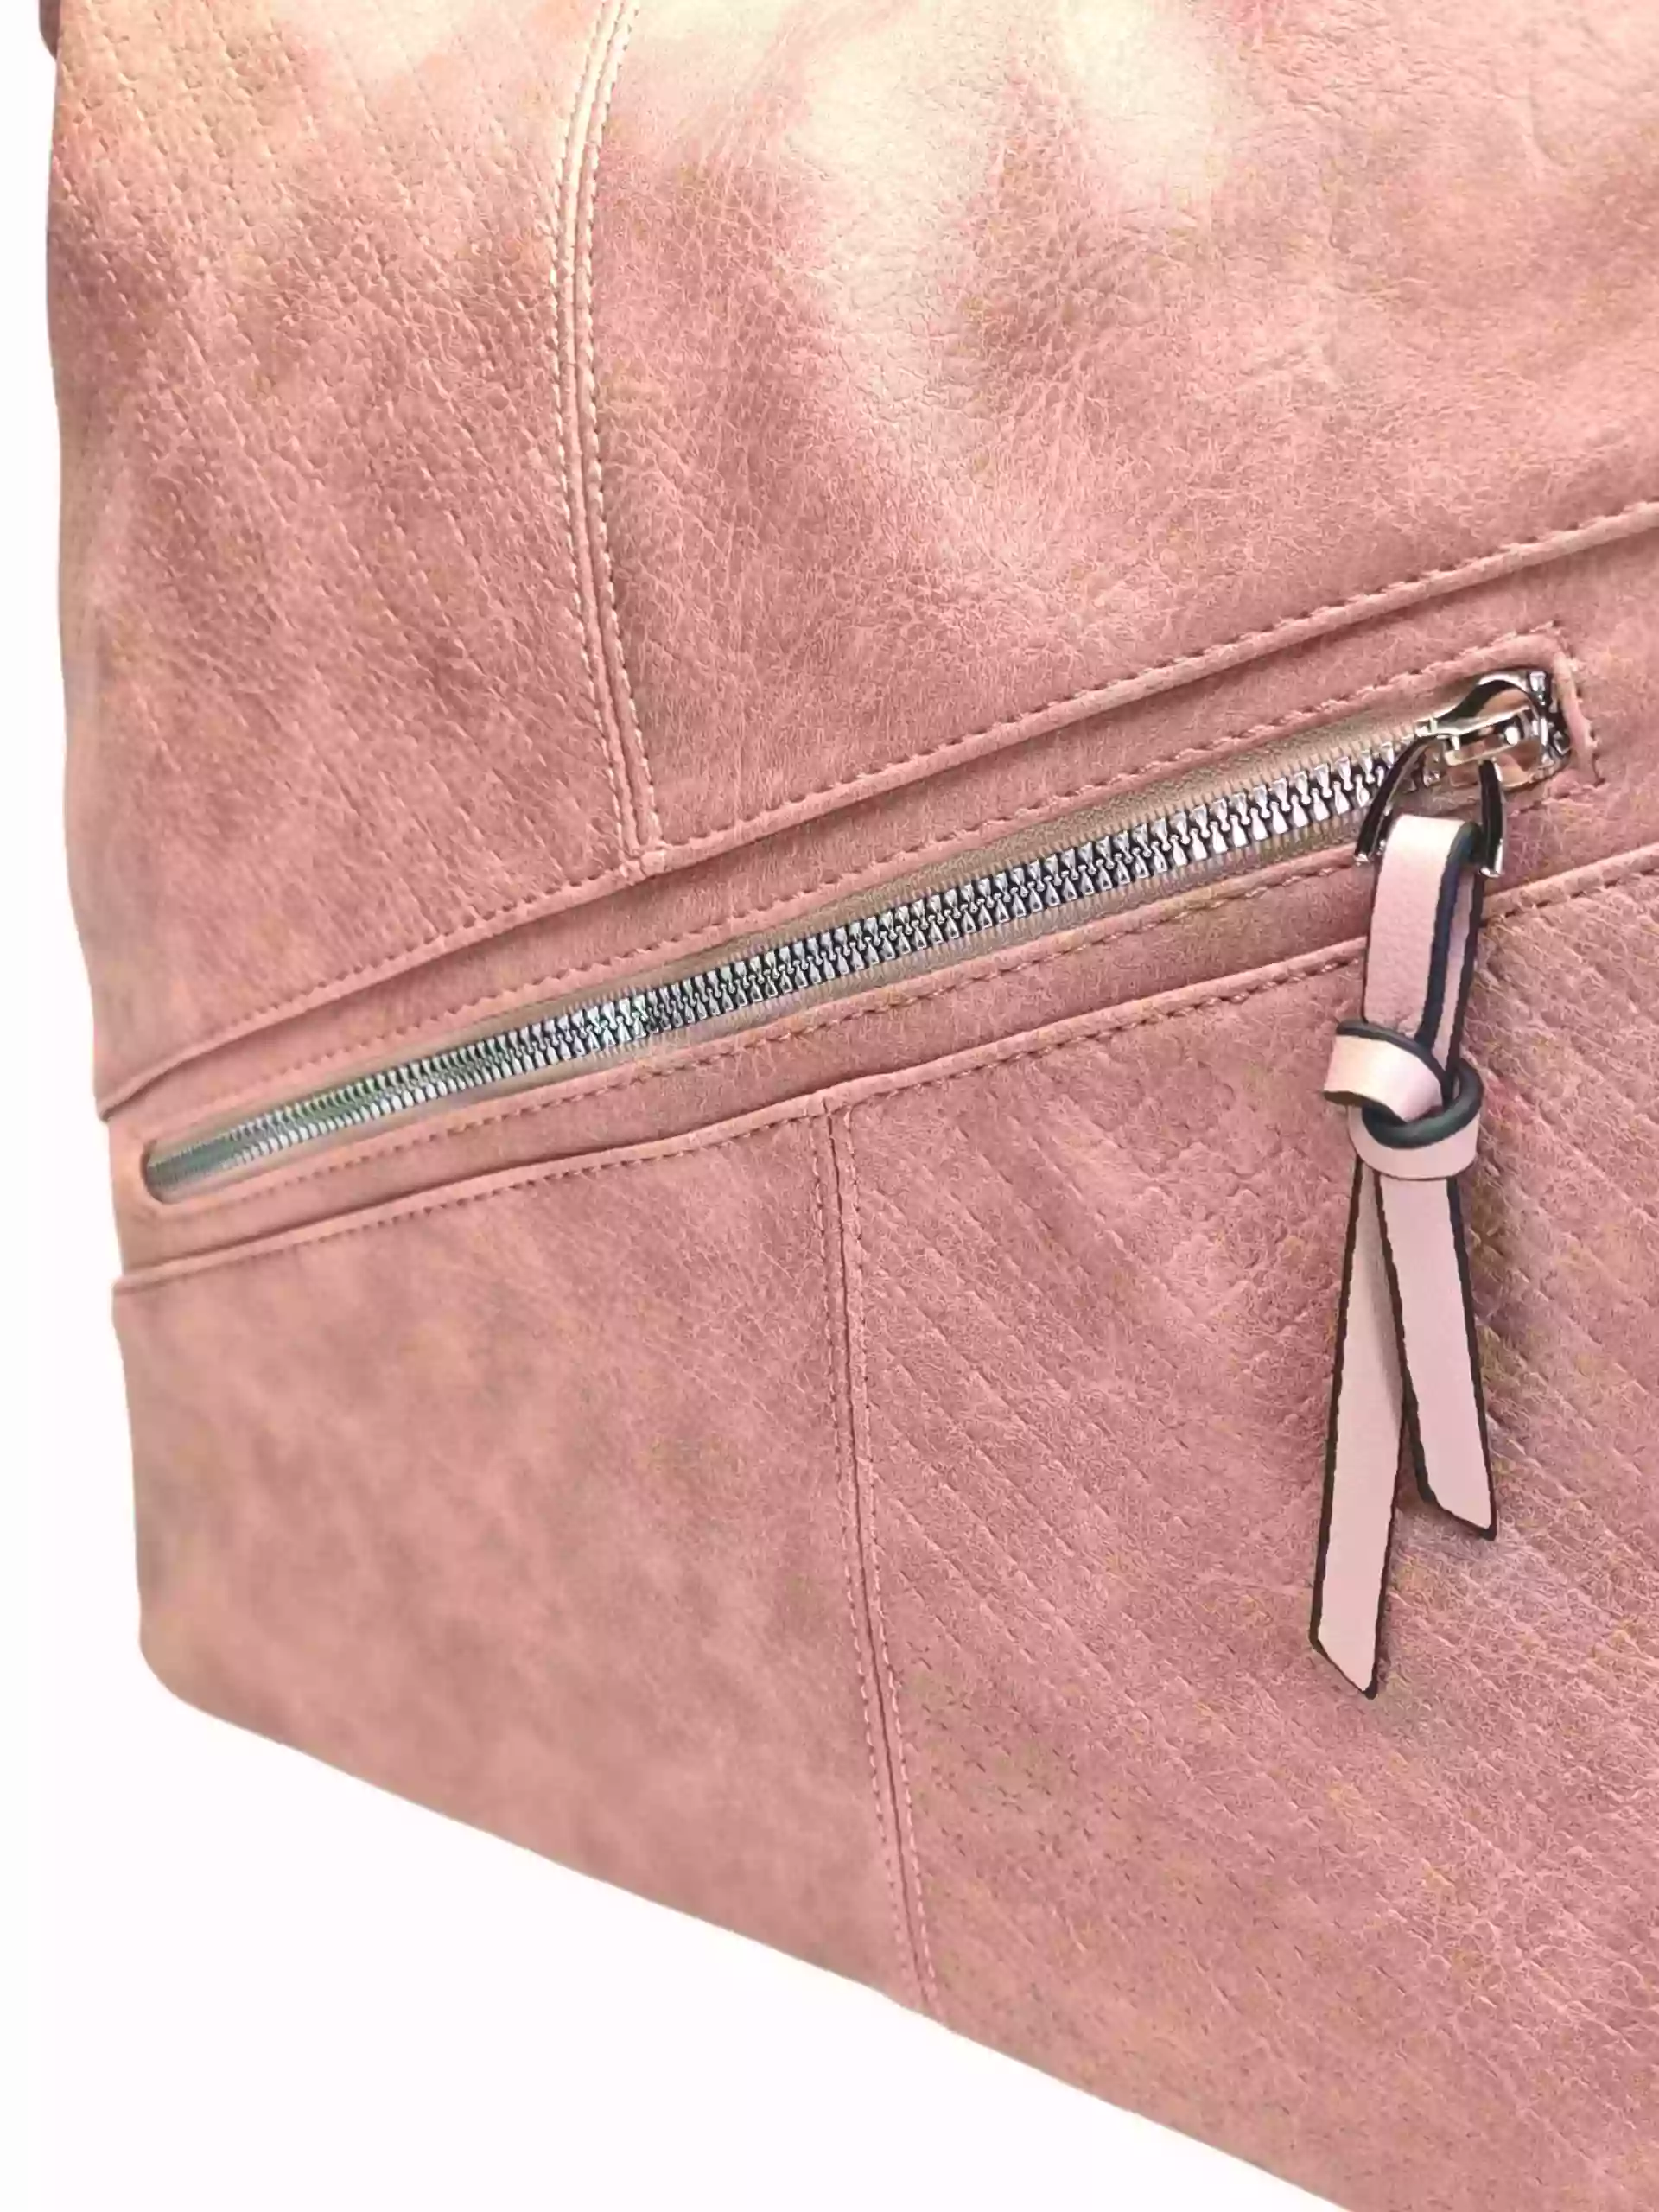 Velký starorůžový kabelko-batoh s šikmou kapsou, Tapple, H18077N+, detail kabelko-batohu 2v1